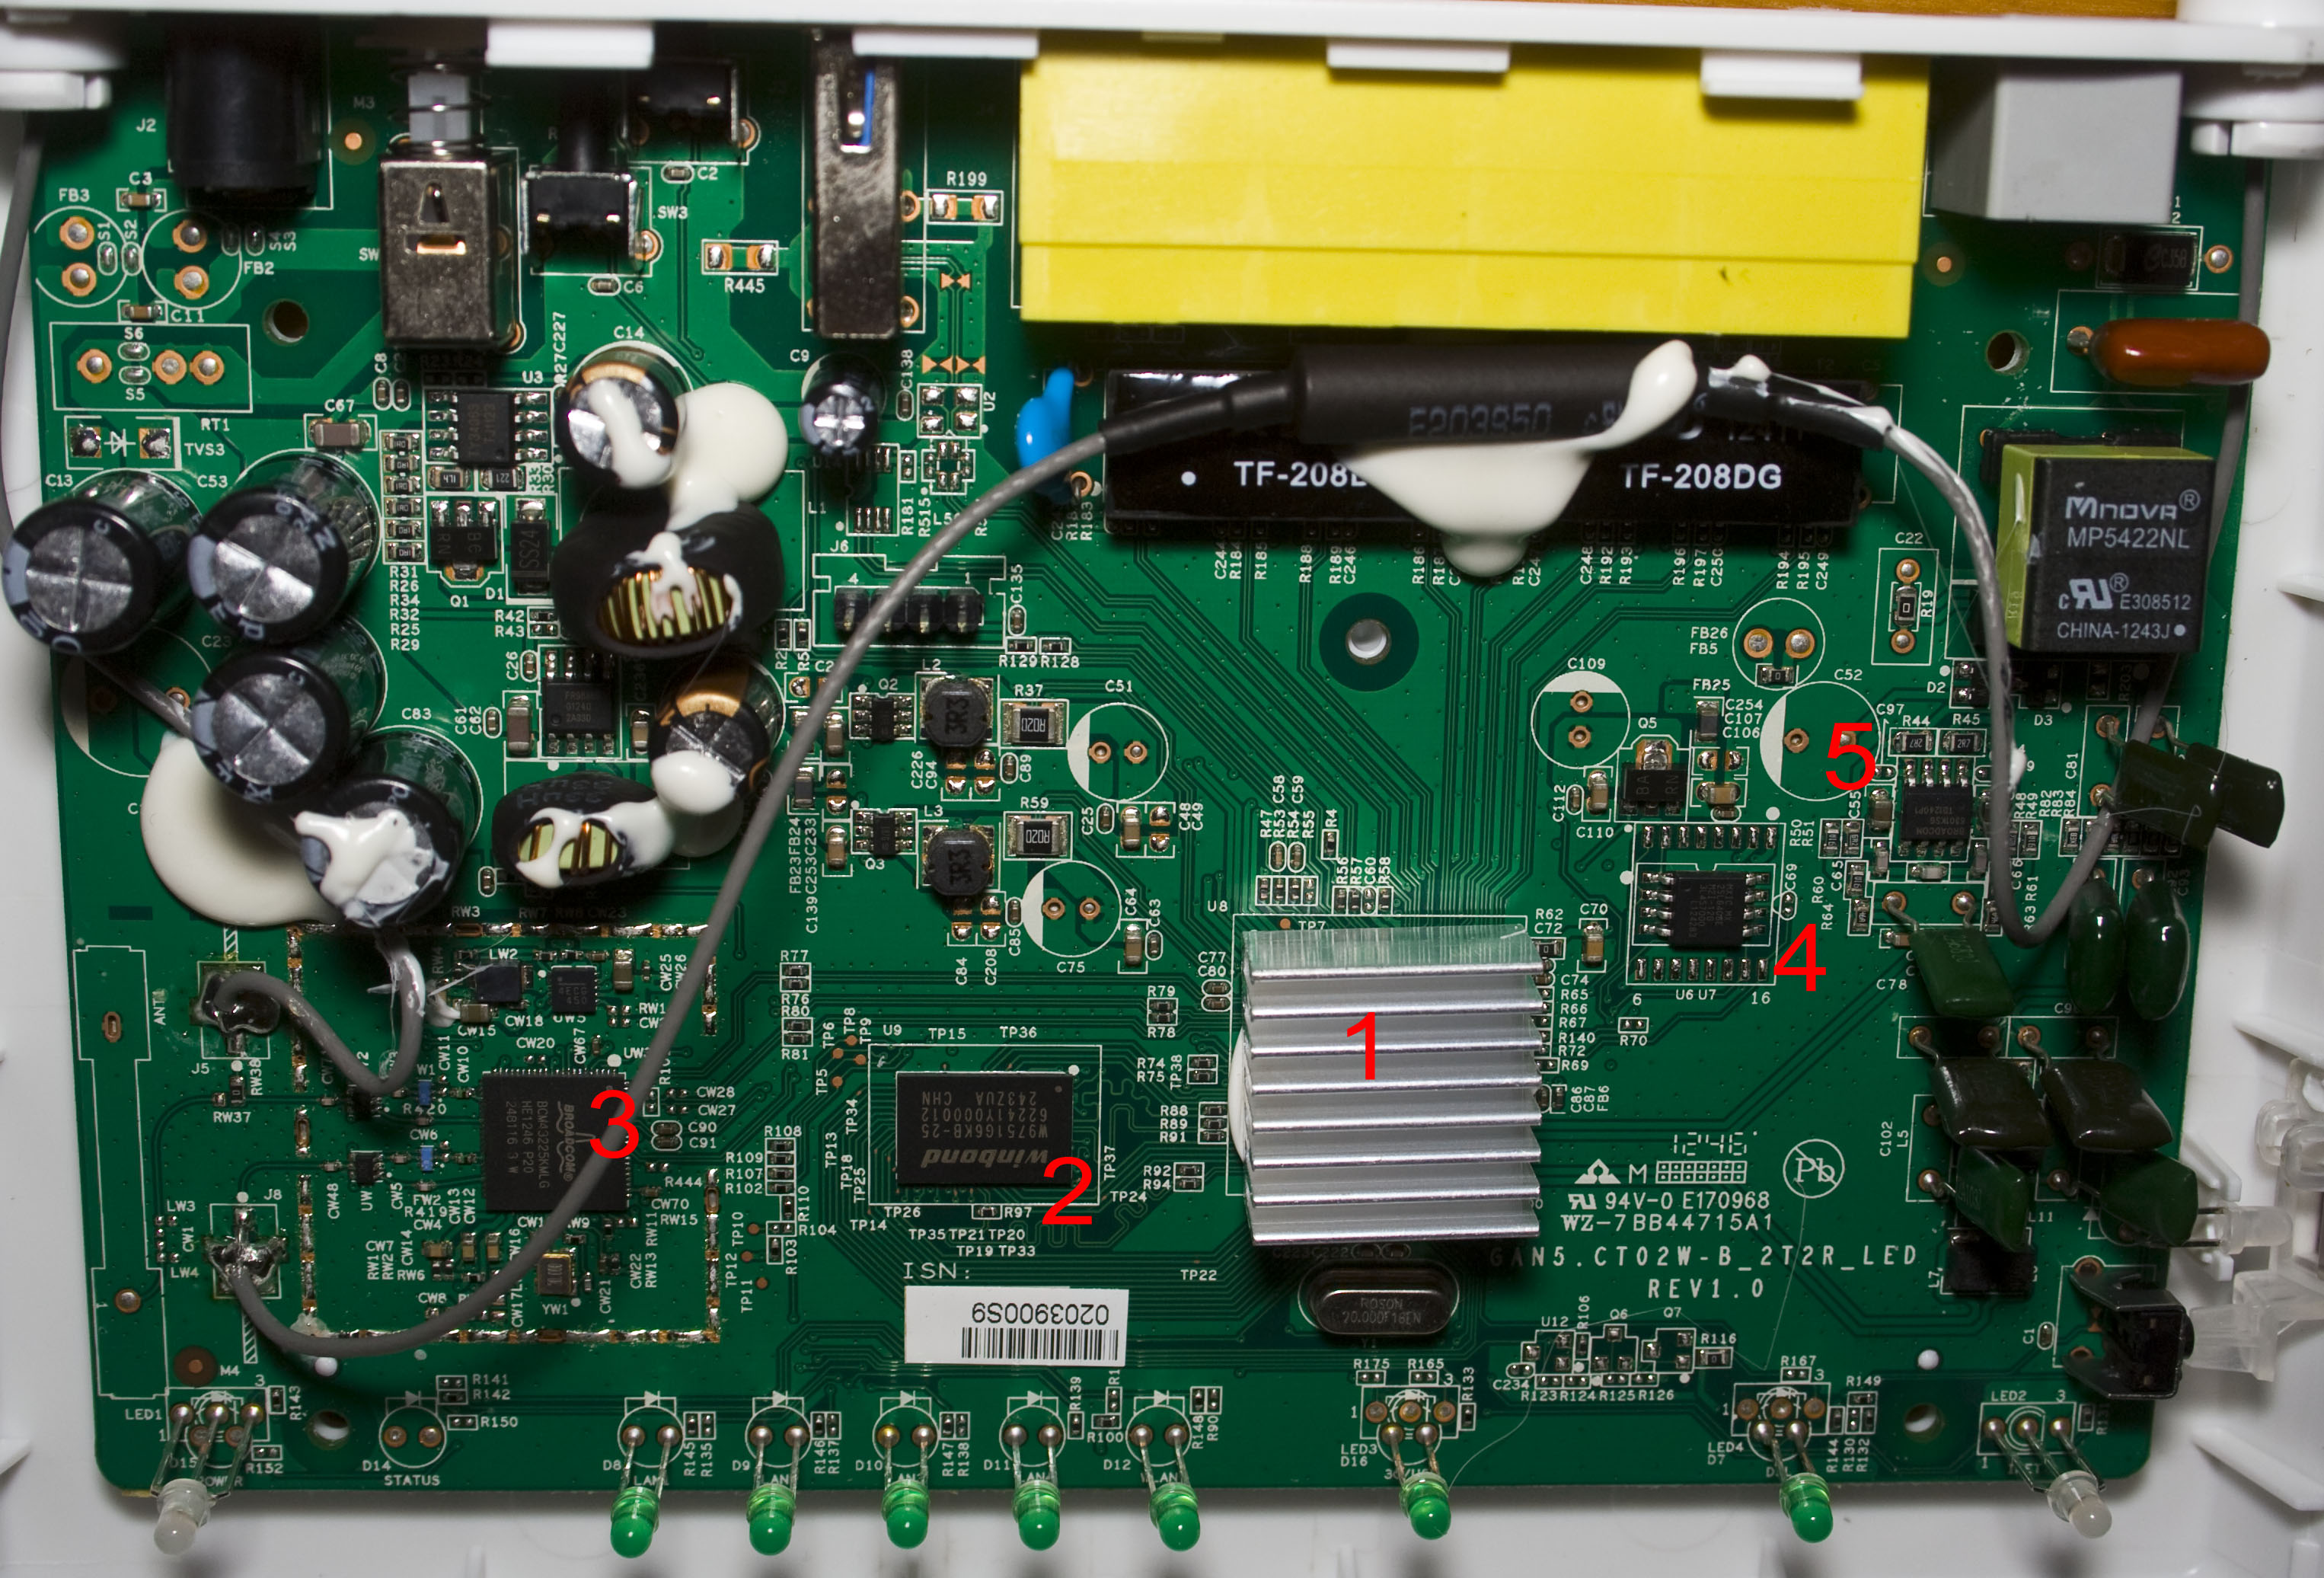 Inside The D Link Wireless N300 Adsl2 Modem Router Dated 12 Insidegadgets